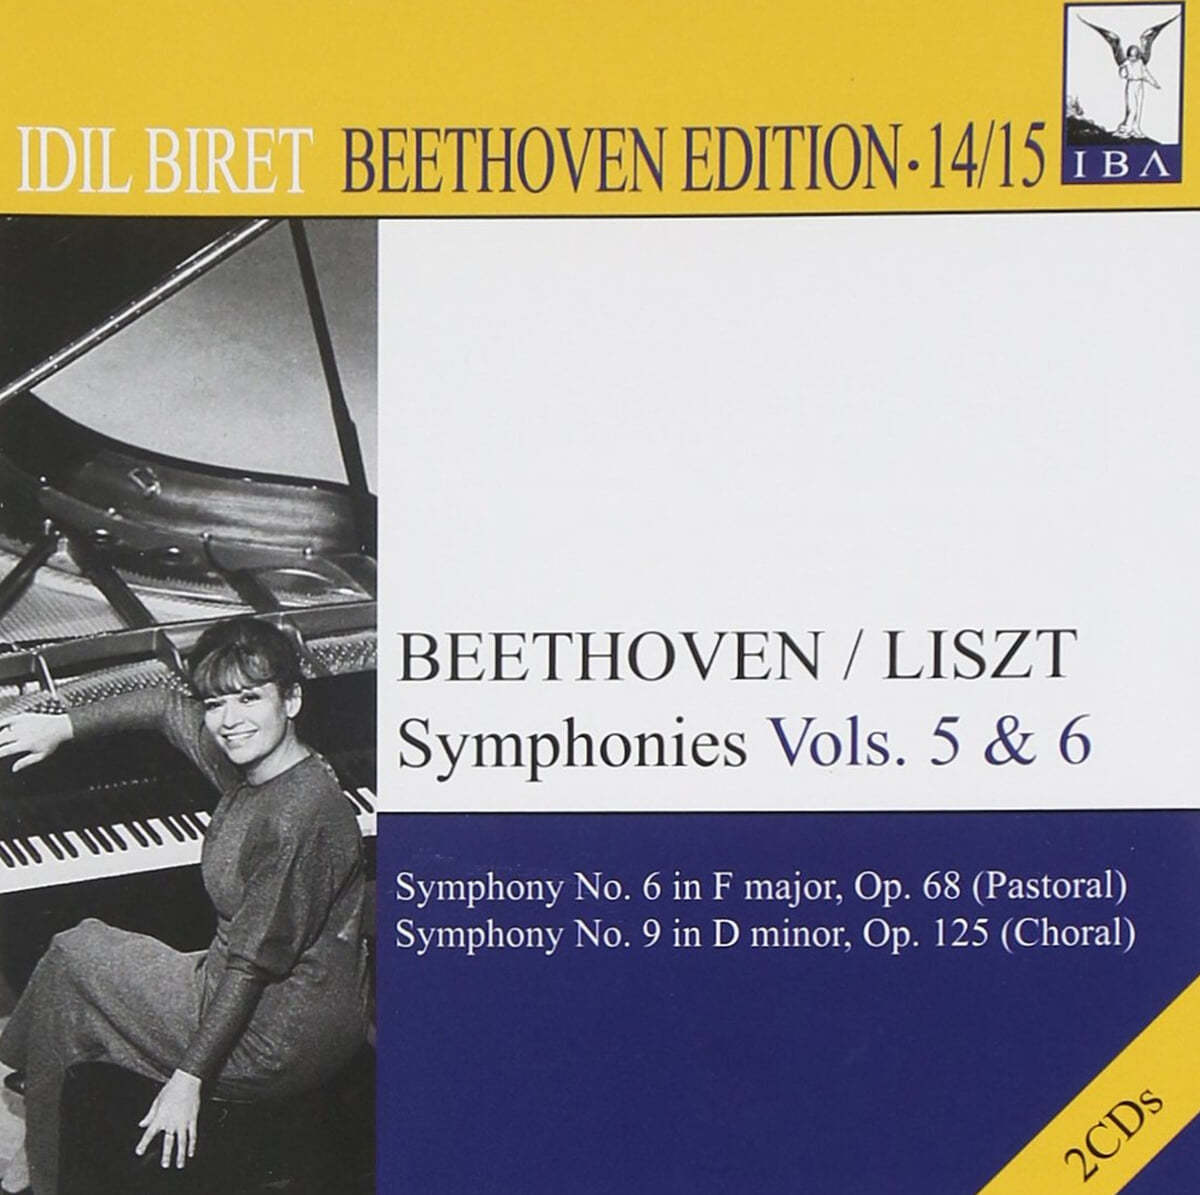 Idil Biret 베토벤-리스트: 교향곡 6번 '전원', 9번 '합창' [피아노 편곡버전] (Beethoven-Liszt: Symphonies Op.68 'Pastorale', Op.125) 